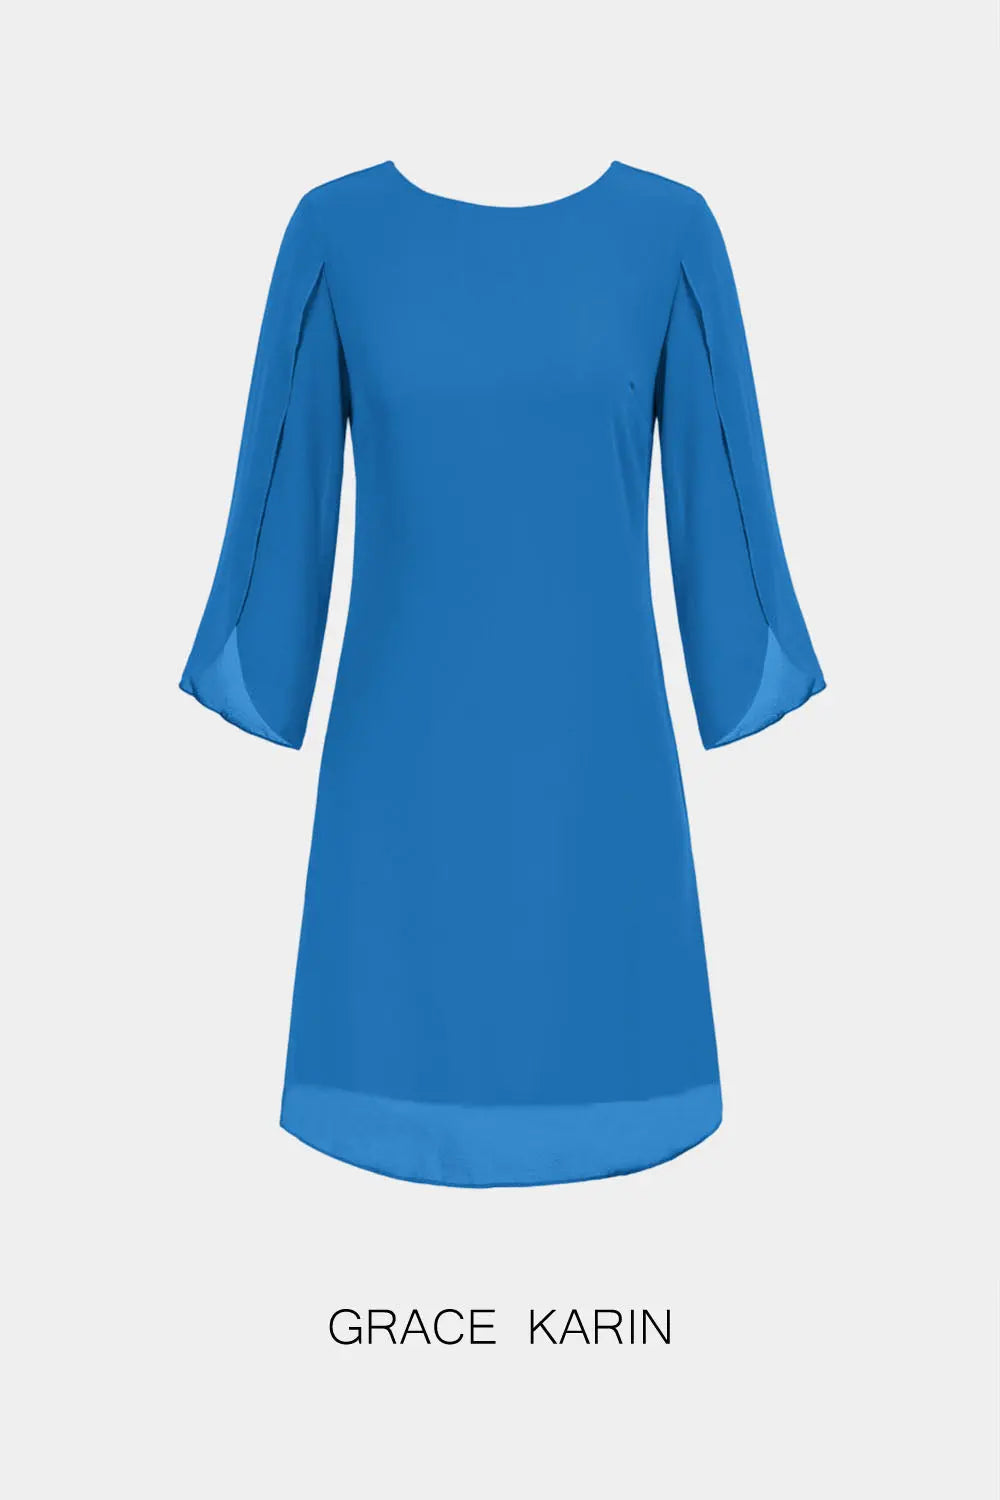 【Only $9.99】GRACE KARIN Chiffon Double-Layer Dress